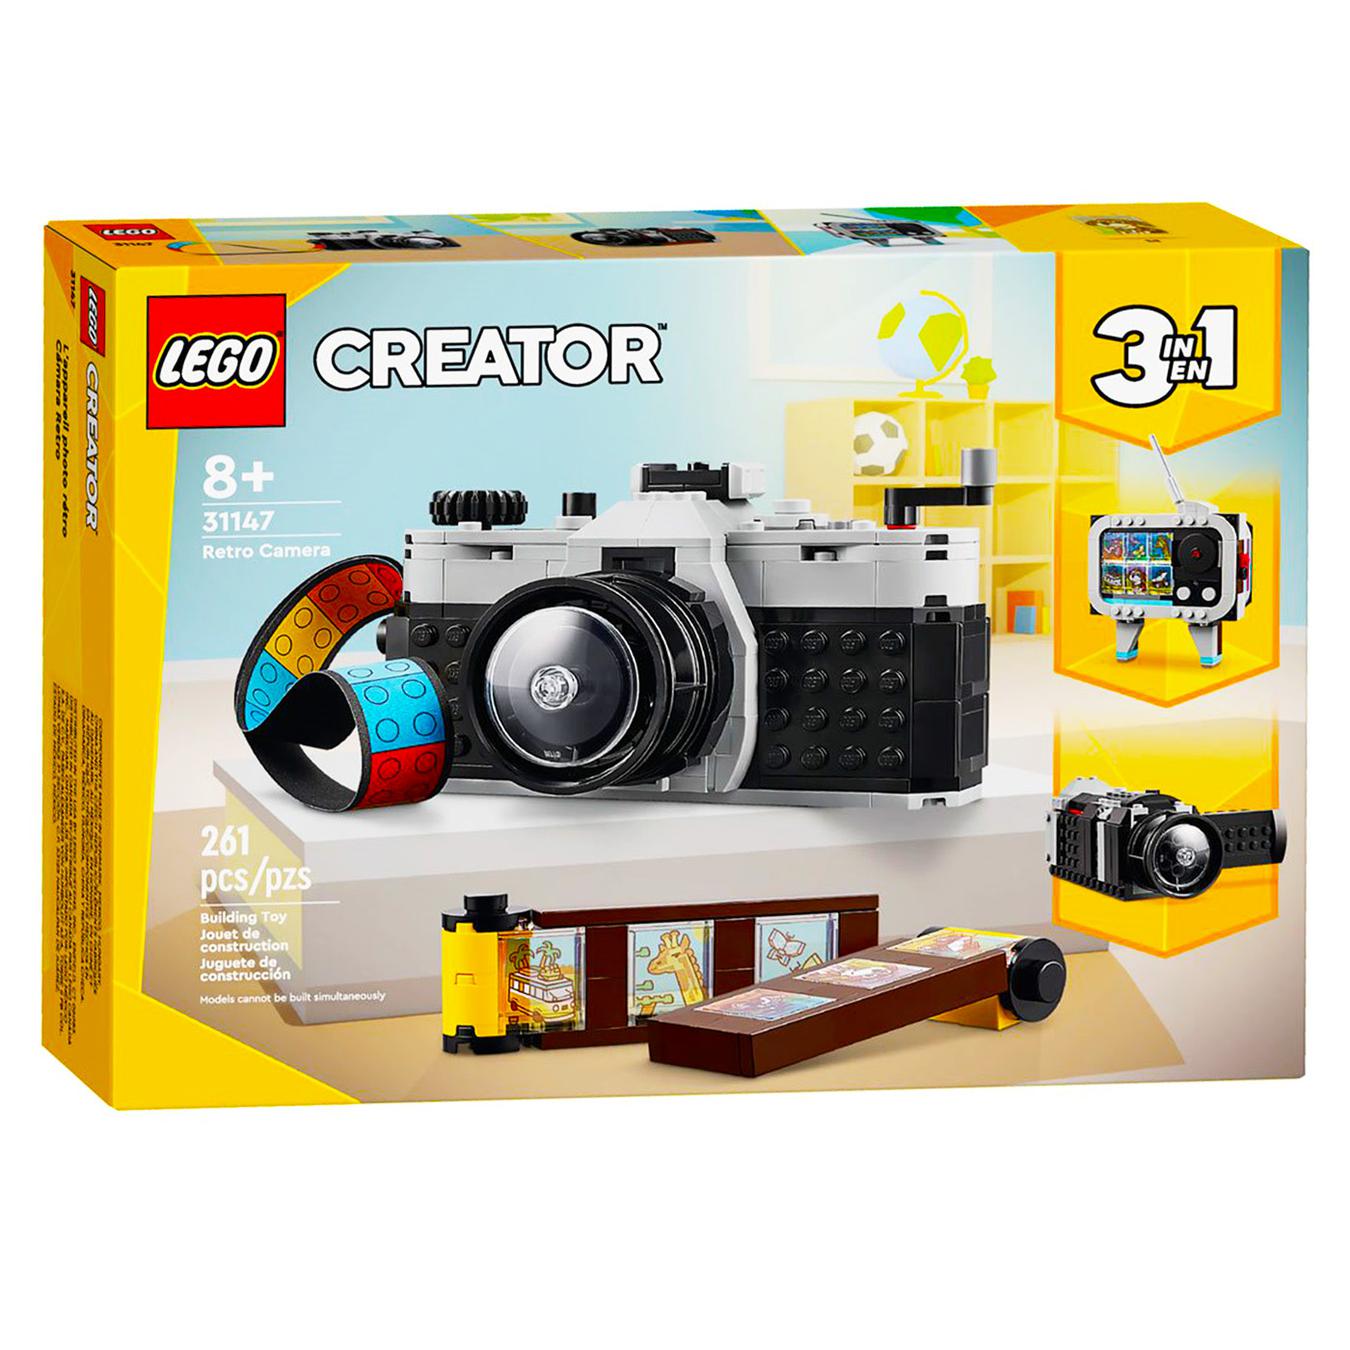 Constructor LEGO Creator 3 in 1 31147 Retro camera